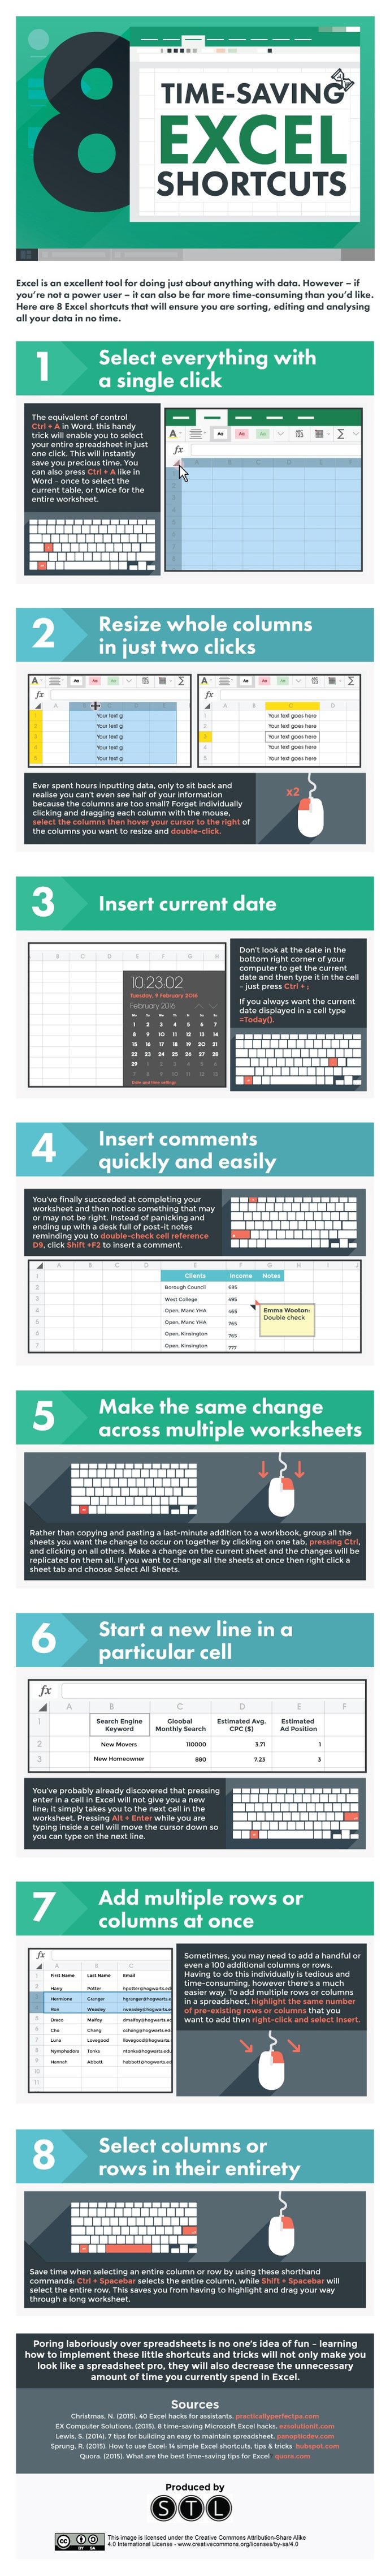 8 TimeSaving Excel Shortcuts Worth Memorizing [Infographic]